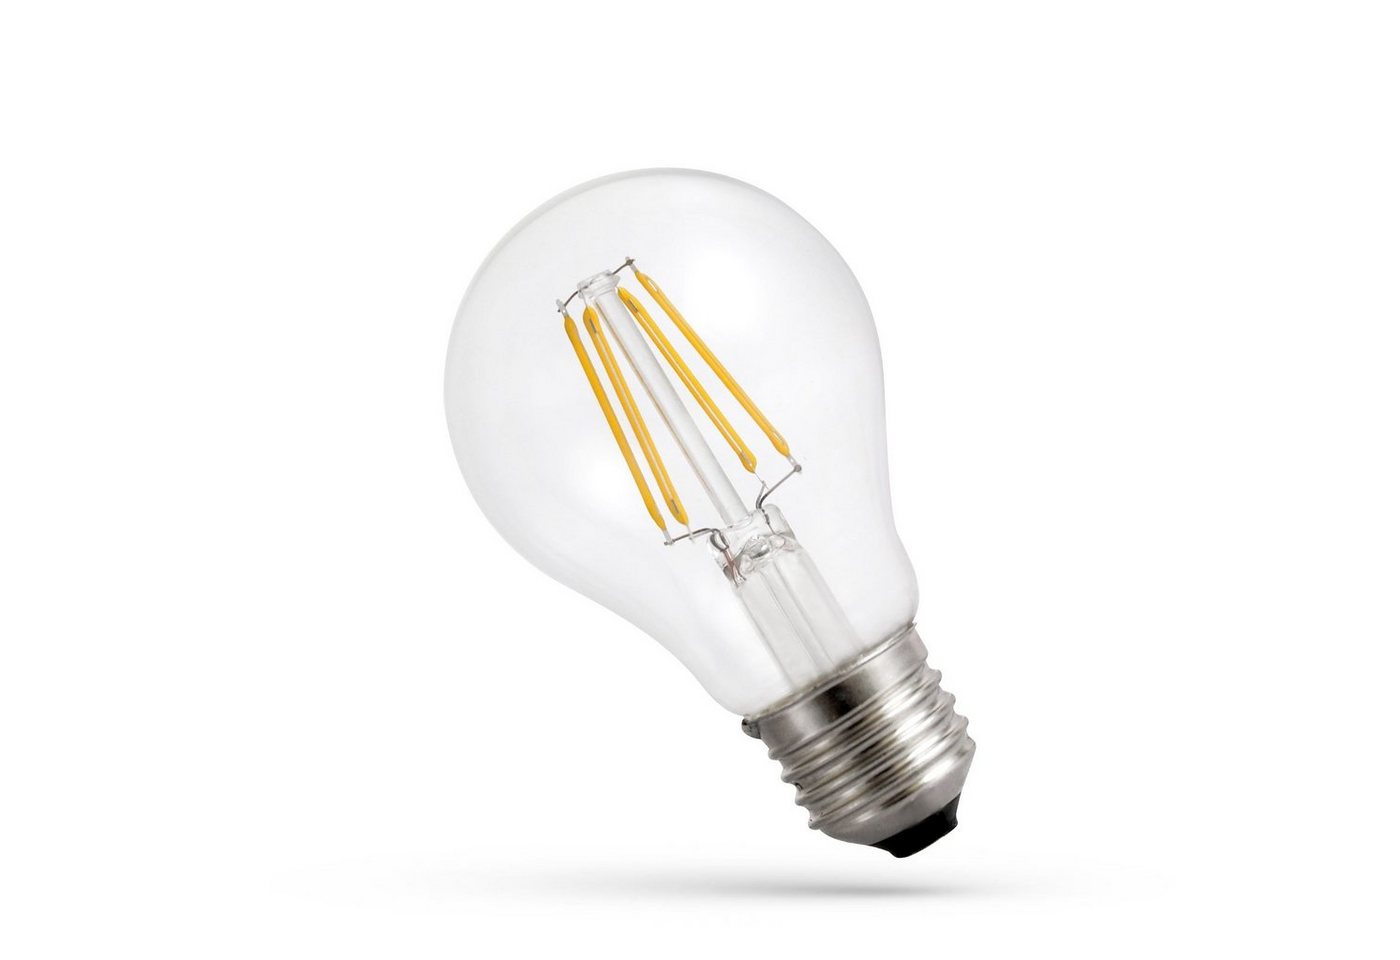 SpectrumLED LED-Leuchtmittel LED E27 A60 Filament klar 4W 230V Extra Warmweiß 340lm Birne 1800K, E27, Extra Warmweiß von SpectrumLED